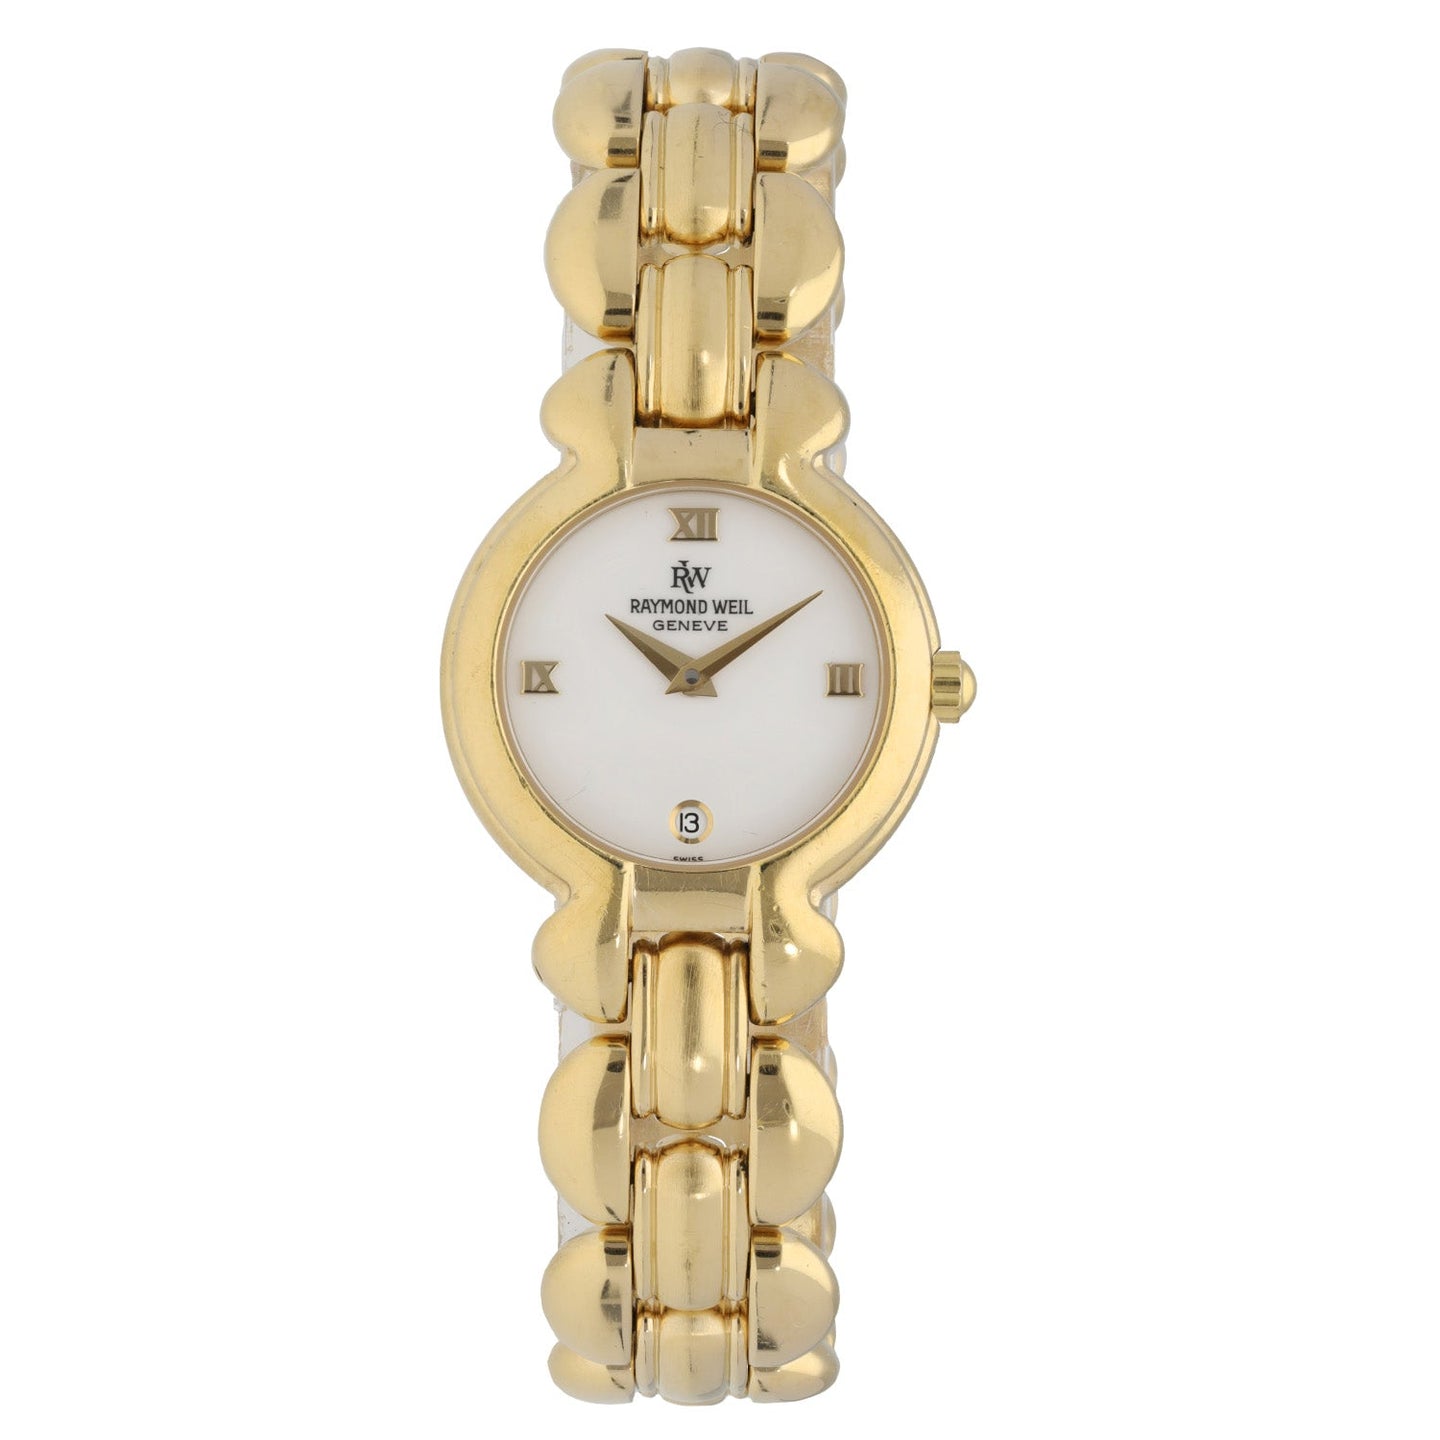 Raymond Weil Geneve 5535 24mm Gold Plated Watch